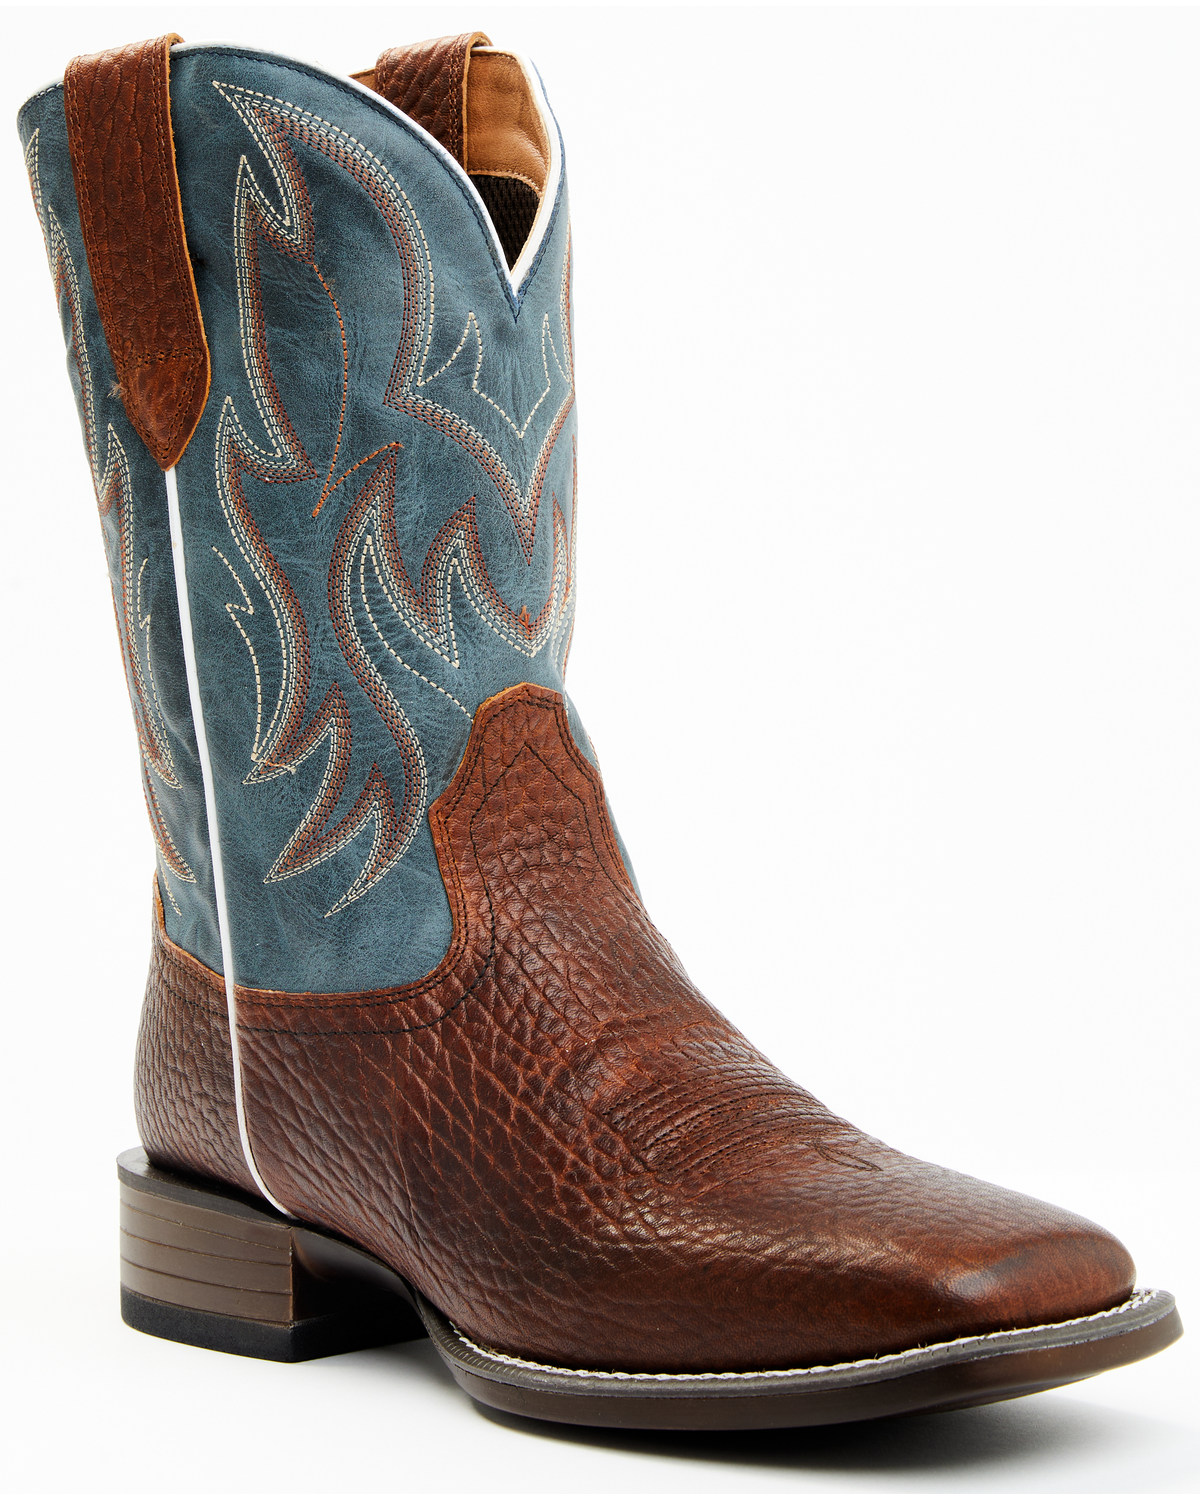 Cody James Men's Hoverfly Dakota Western Performance Boots - Broad Square Toe